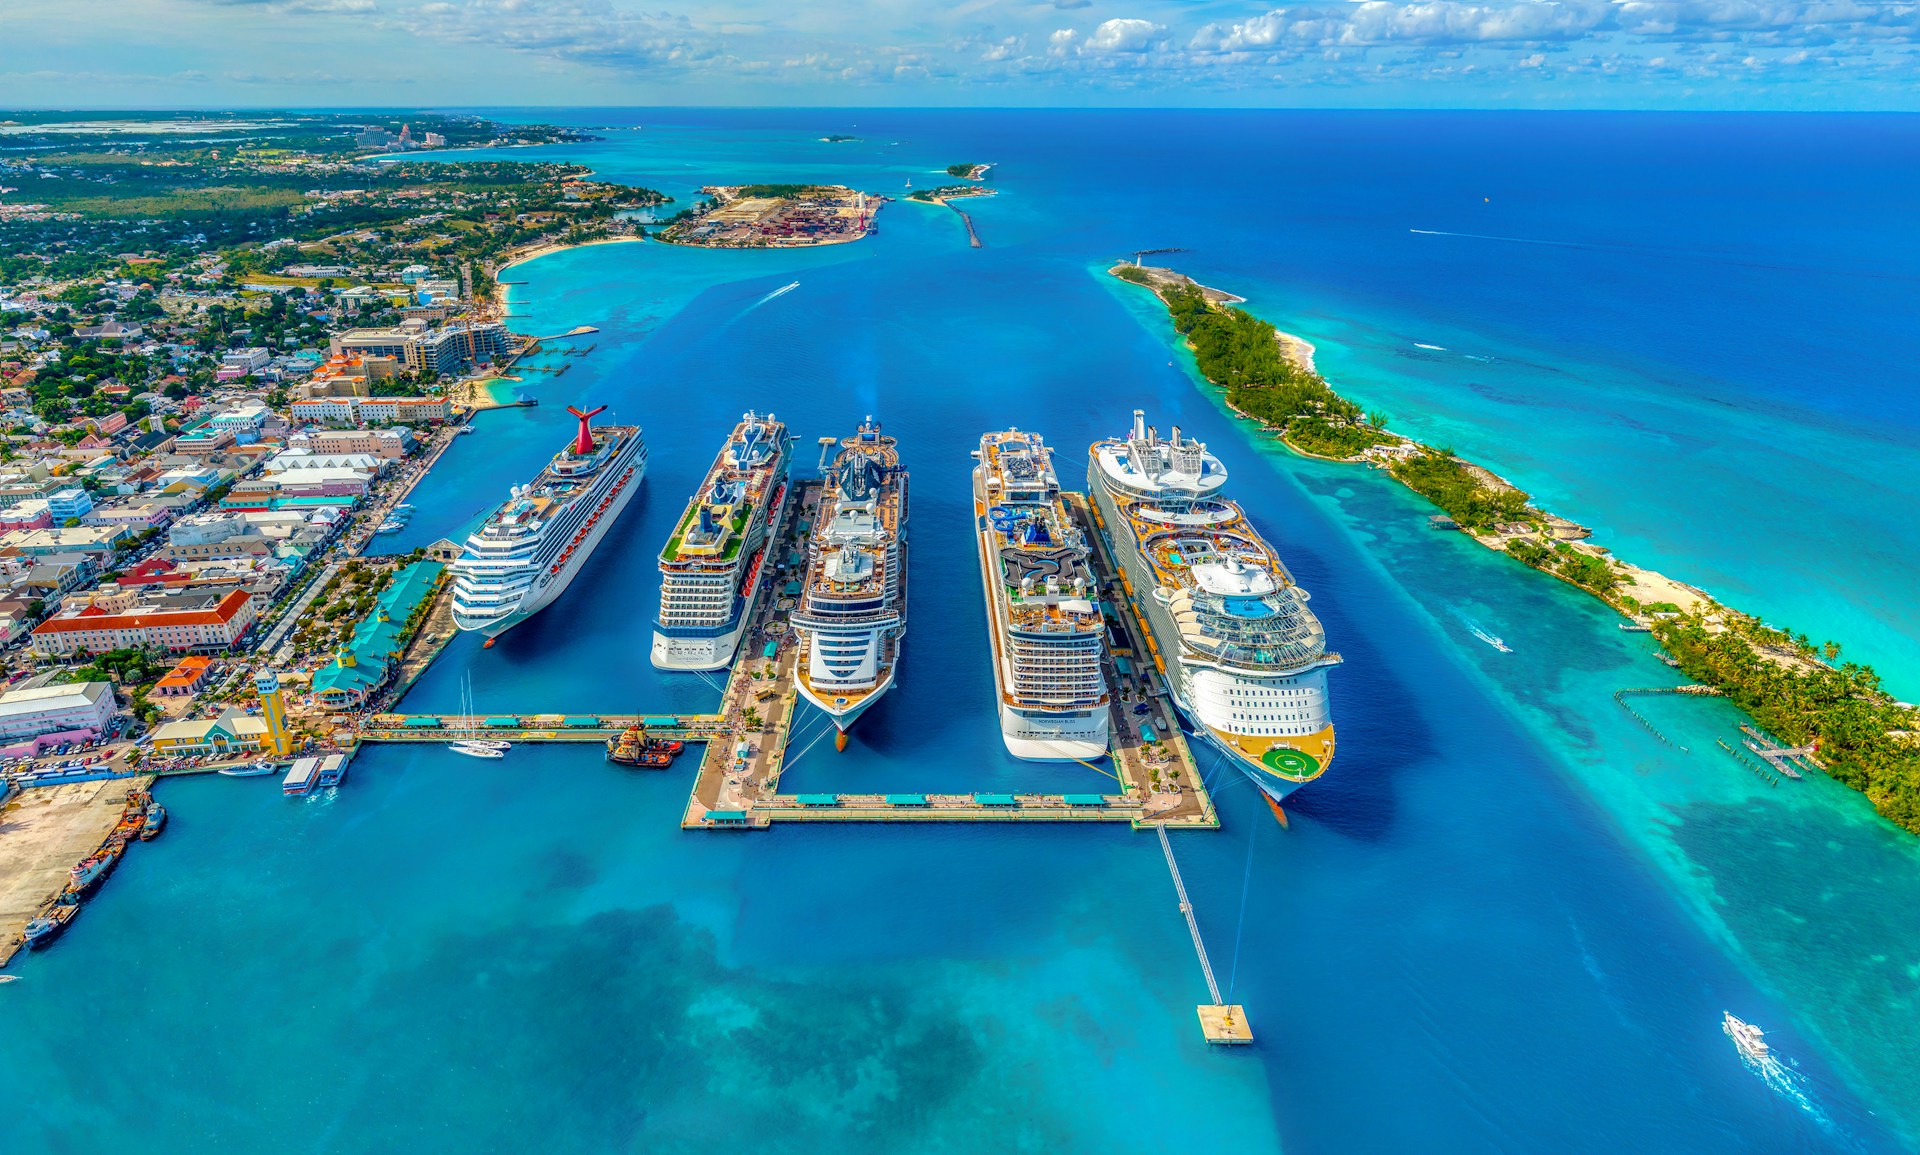 Cruise ships docked in the Bahamas